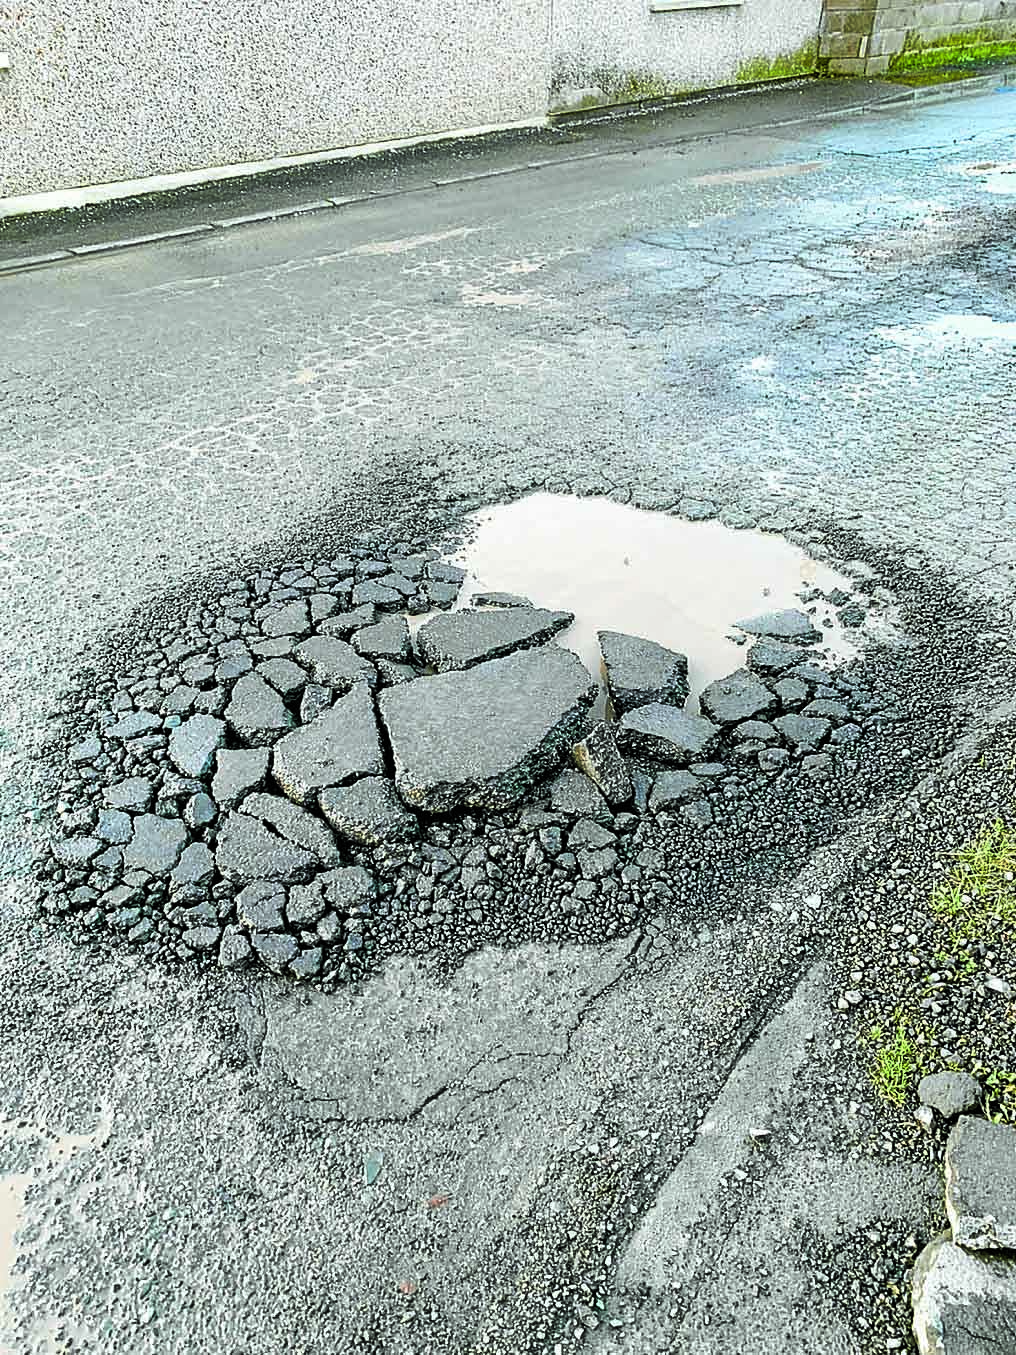 Town’s pothole plague put on record